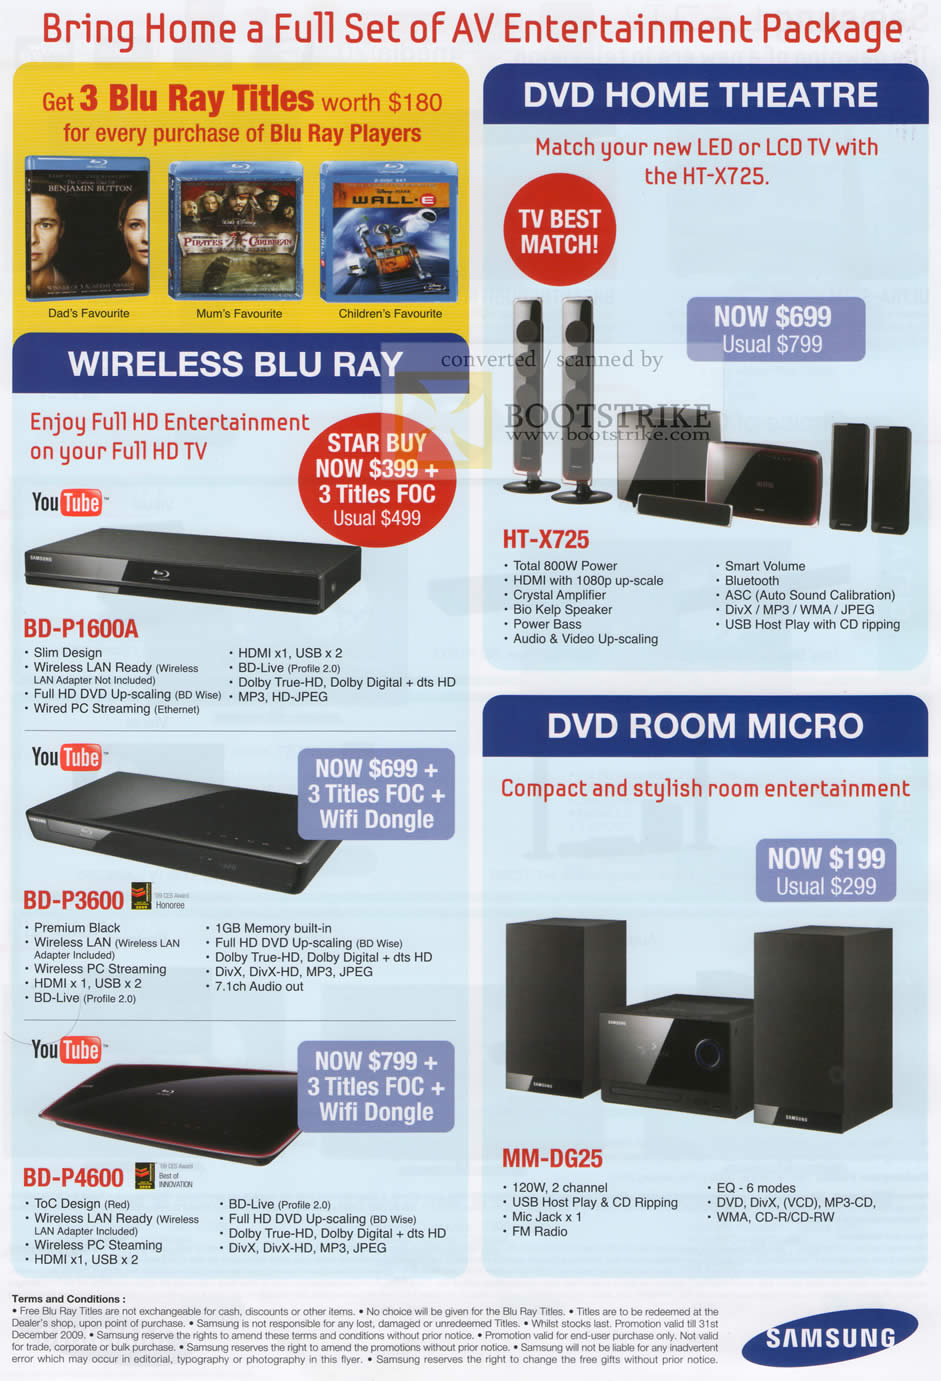 Sitex 2009 price list image brochure of Samsung DVD Home Theatre Wireless Blu Ray Room Micro Player